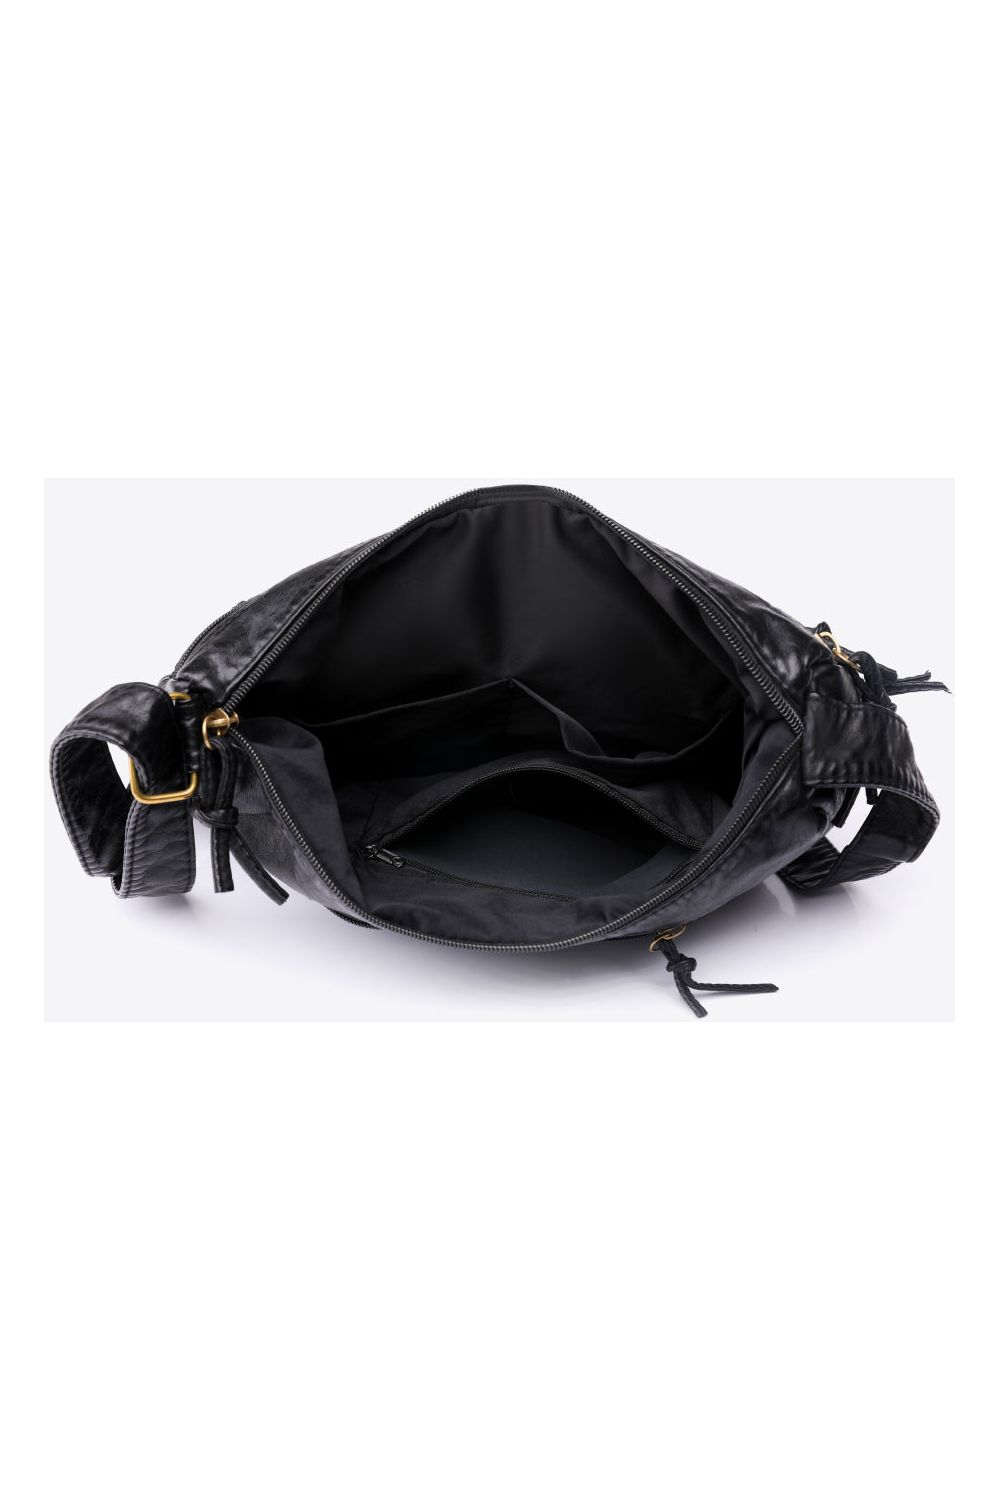 Baeful PU Leather Crossbody Bag - By Baano